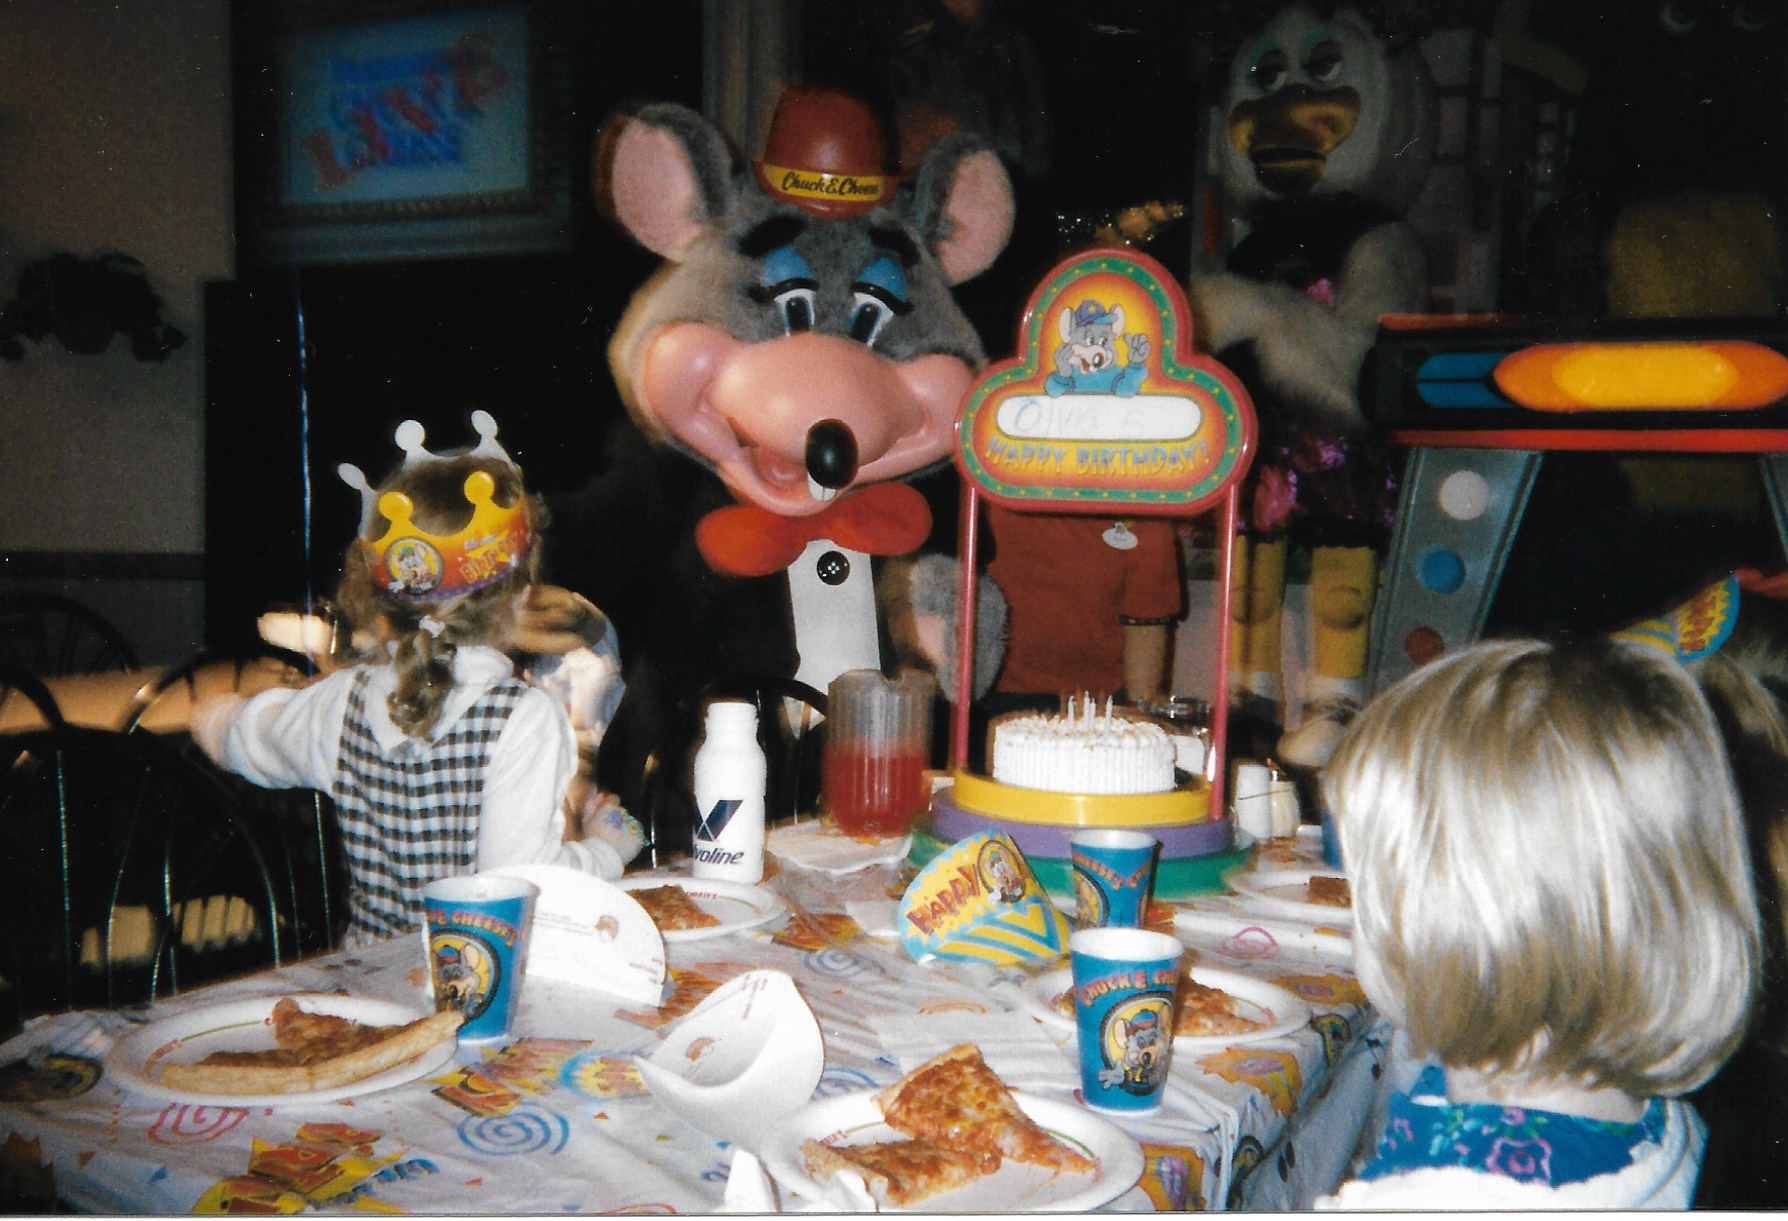 Chuck E. Cheese: Kids Birthday Parties, Pizza & Arcade Games